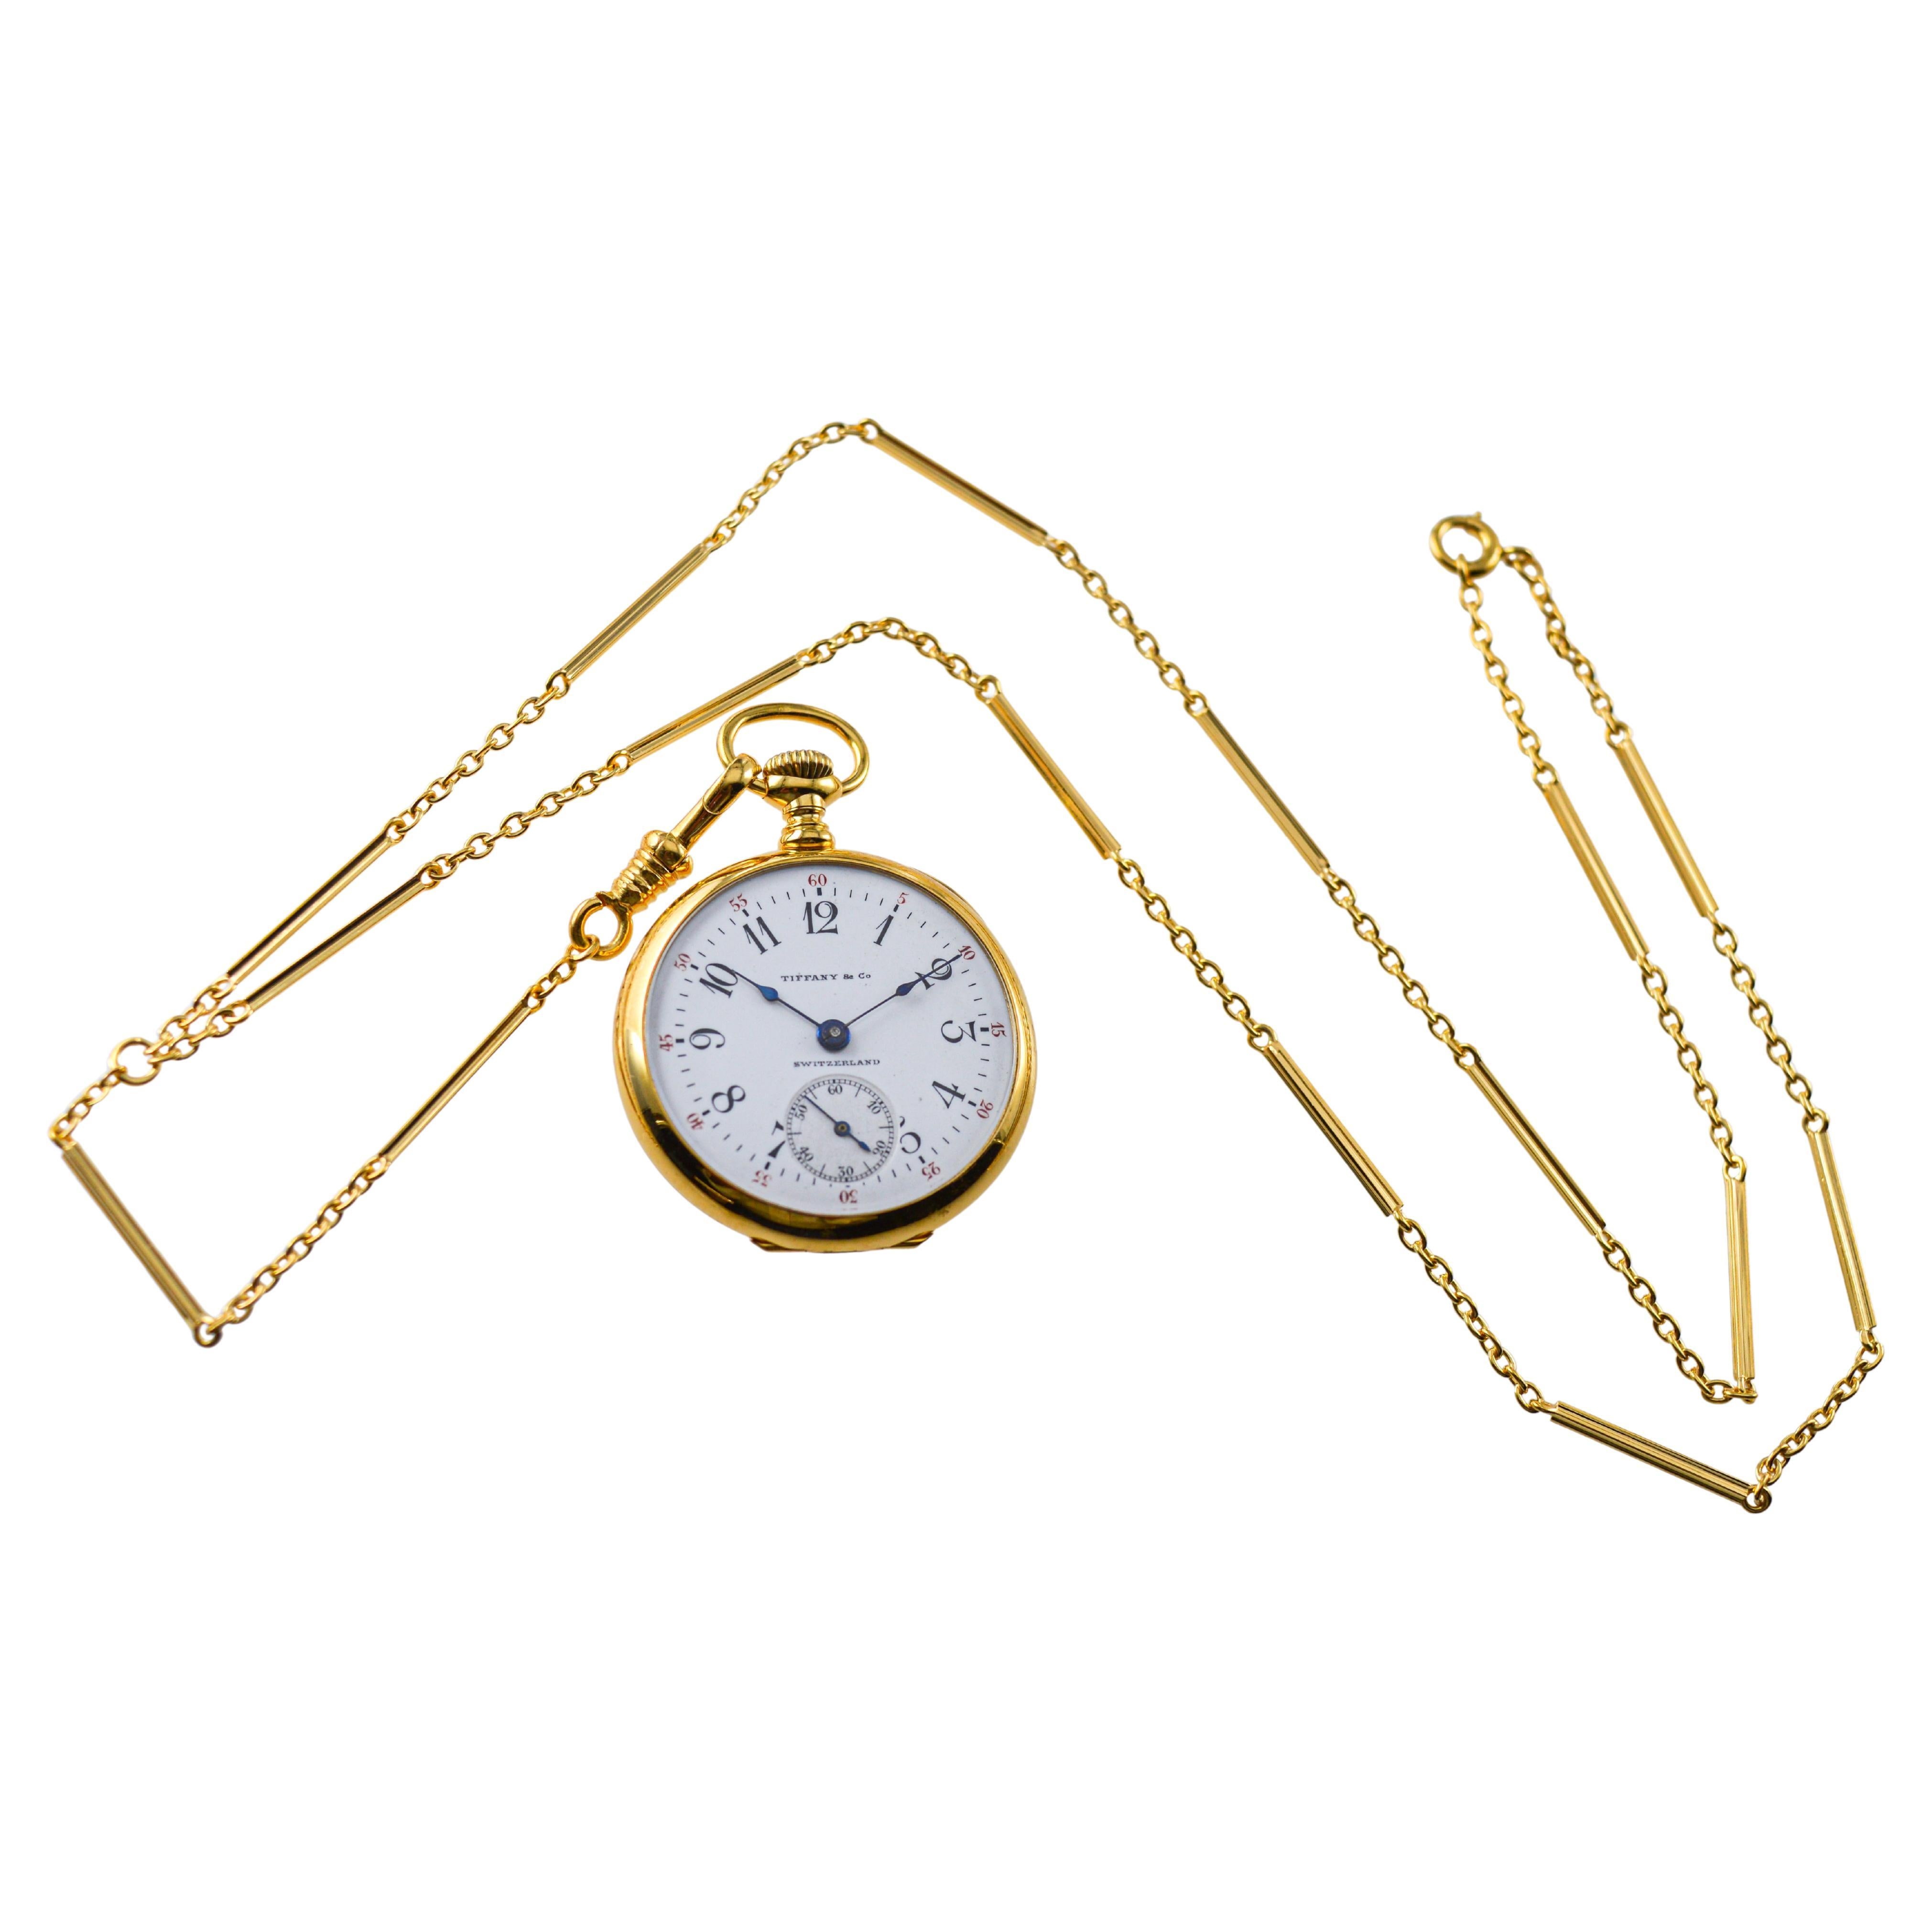 Tiffany & Co Montre pendentif en or 18 carats avec chaîne en or de 1912 et cadran en émail en vente